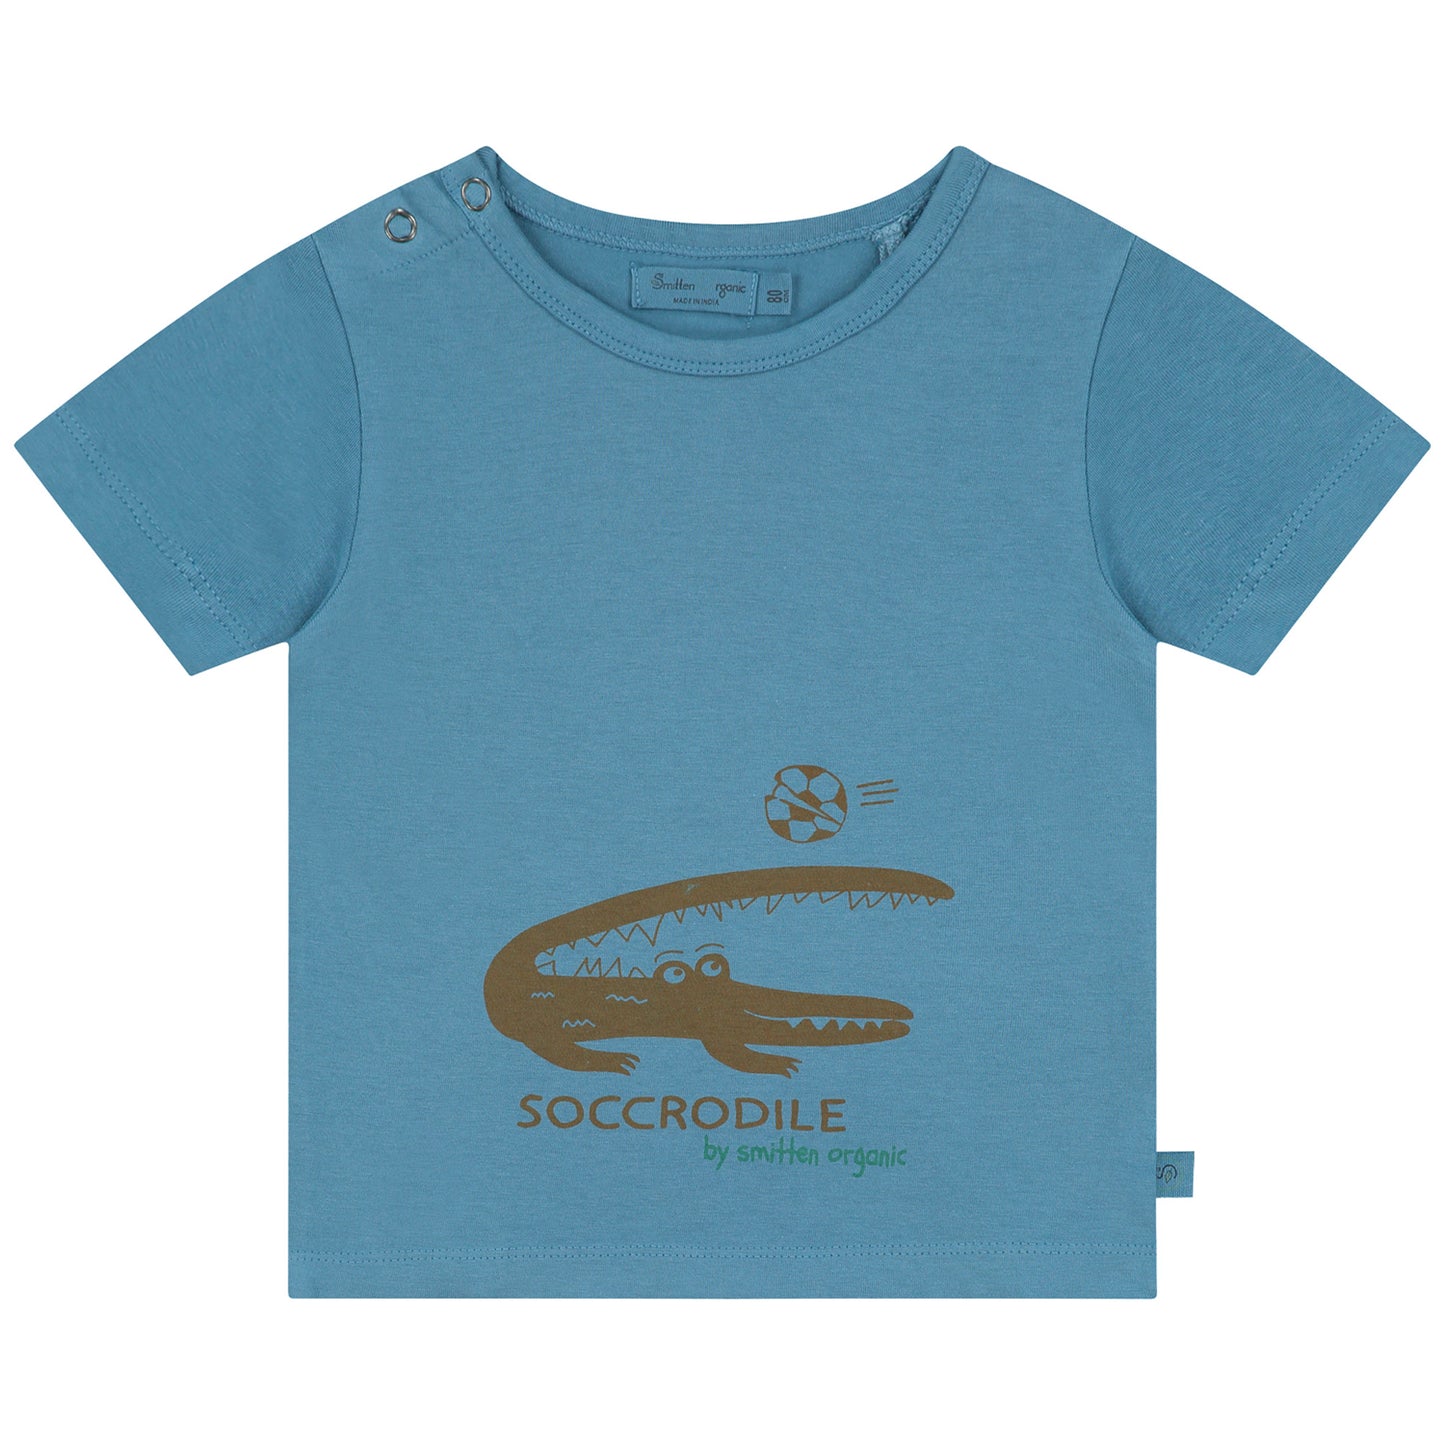 Krokodil, das Fußball Unisex-T-Shirt spielt